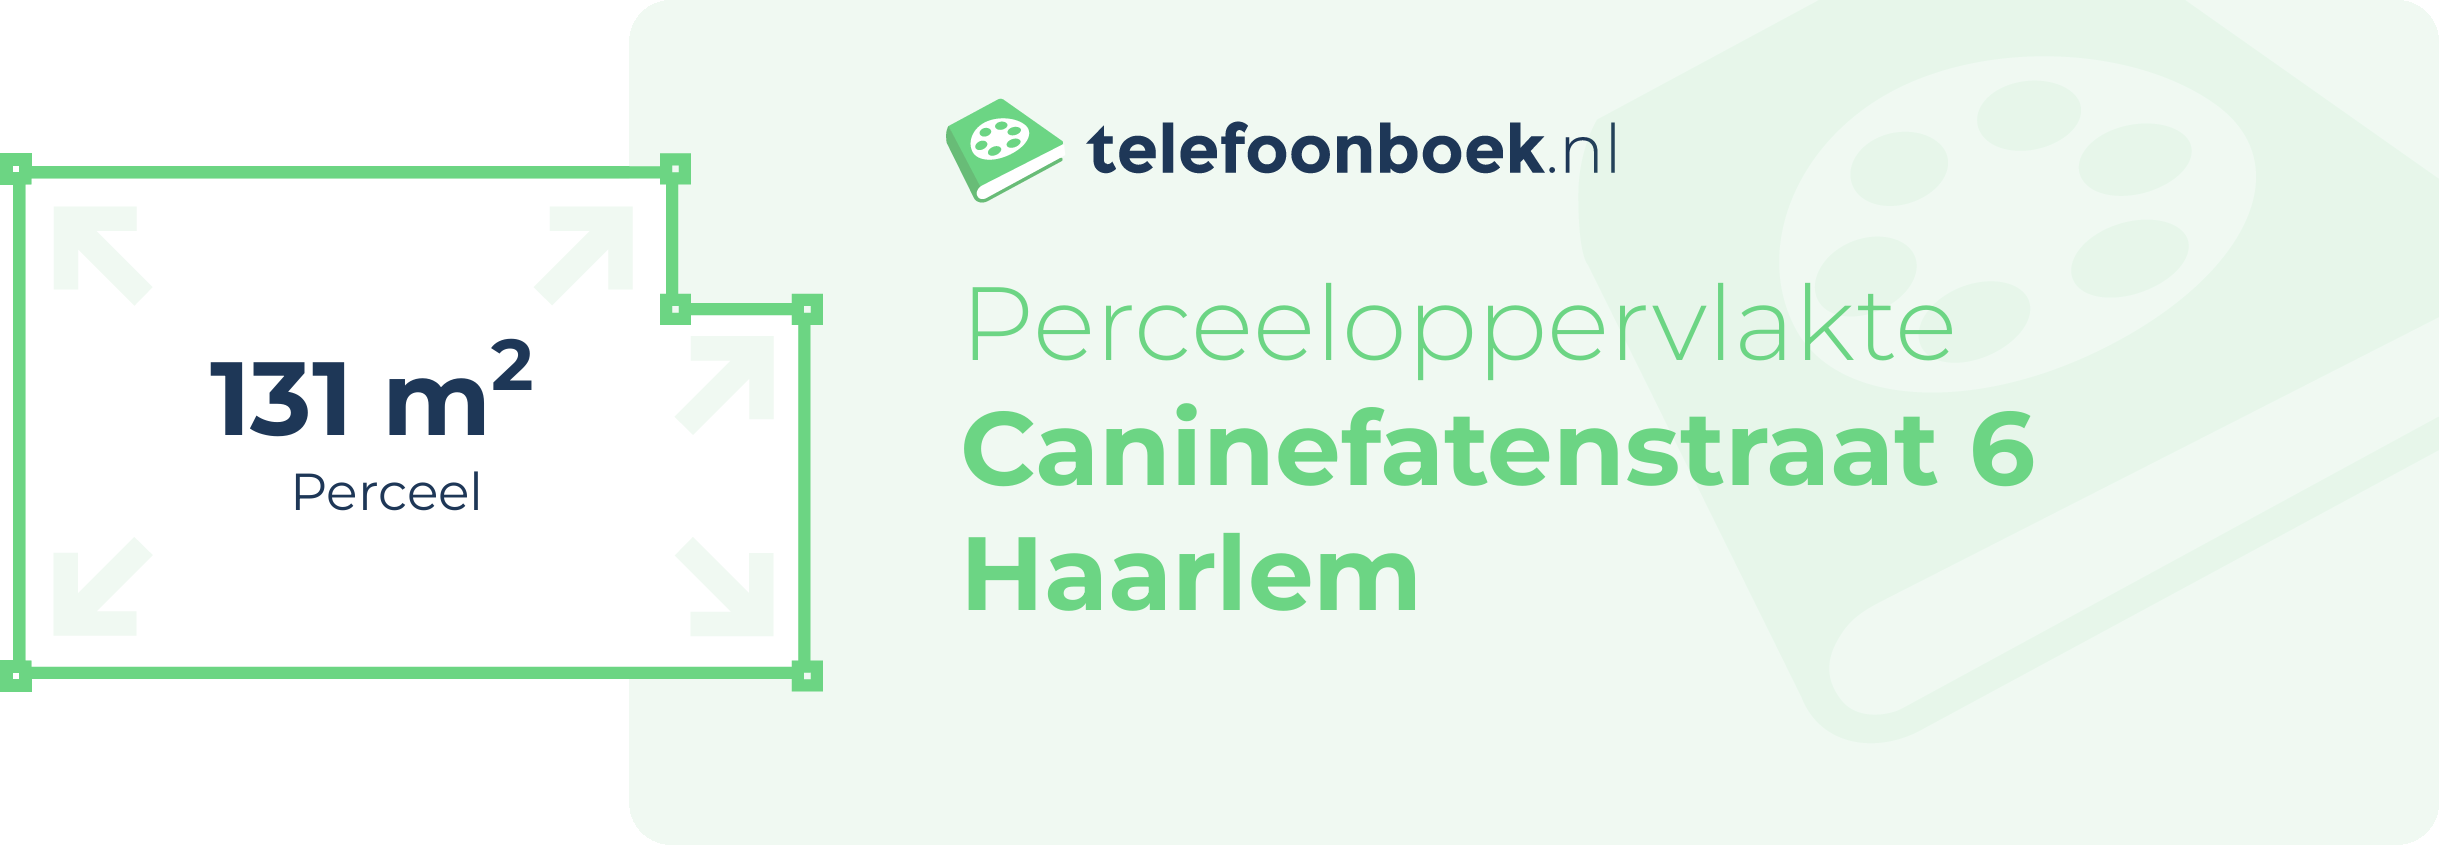 Perceeloppervlakte Caninefatenstraat 6 Haarlem